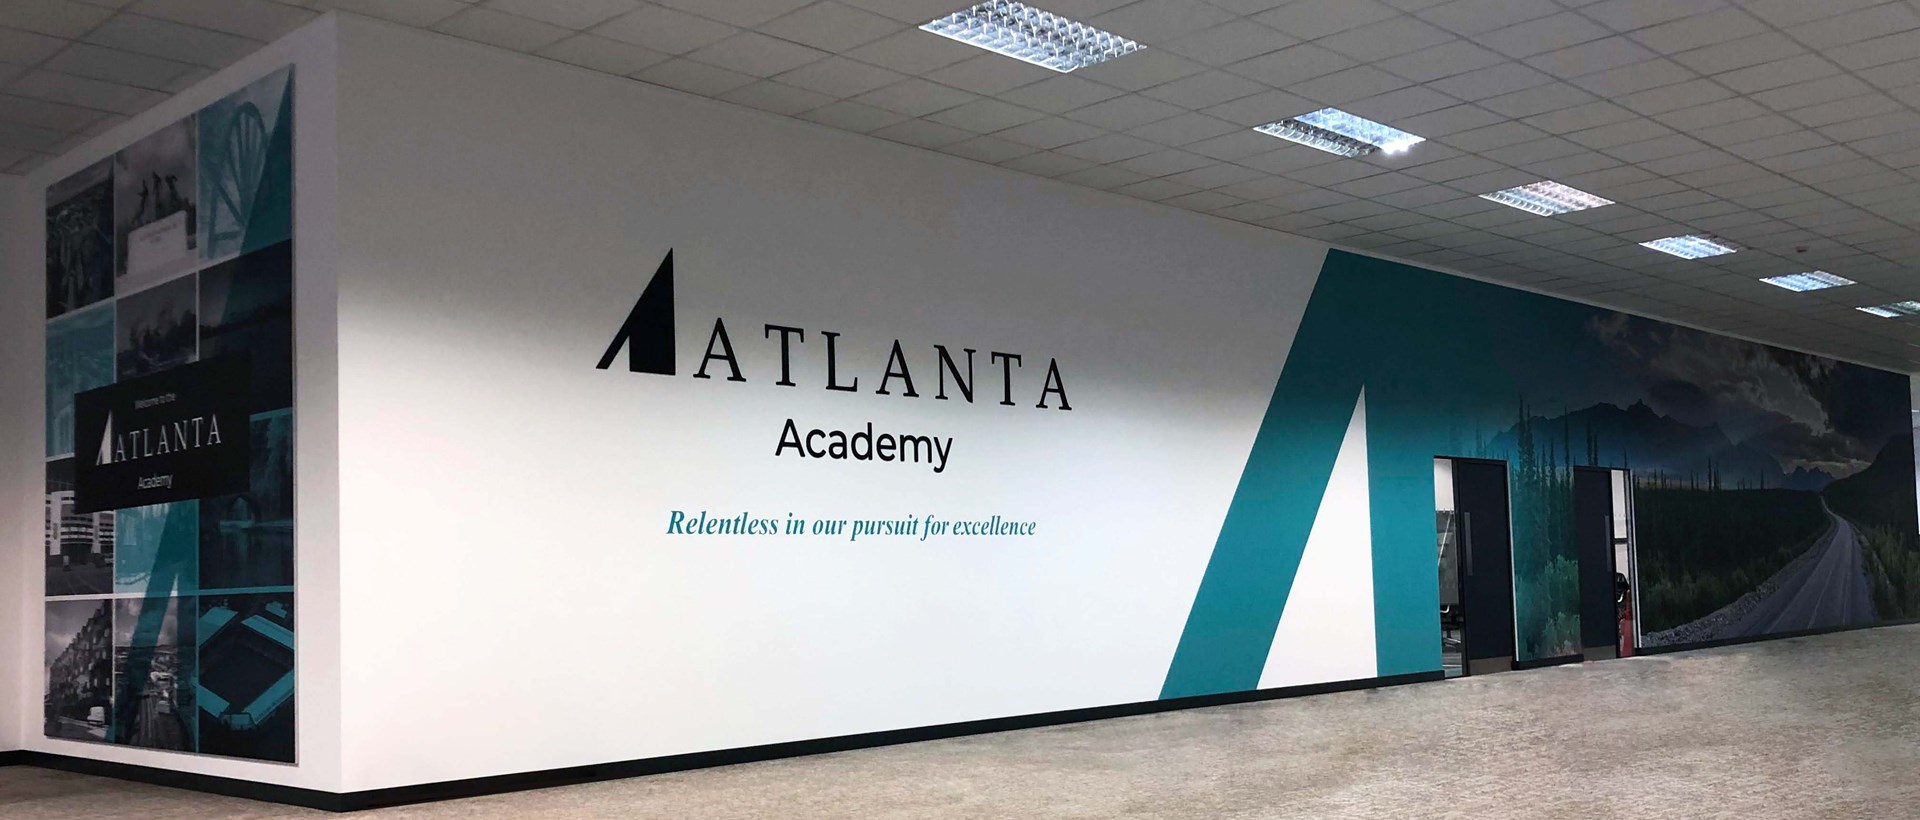 Atlanta Academy Wall Graphics Manchester